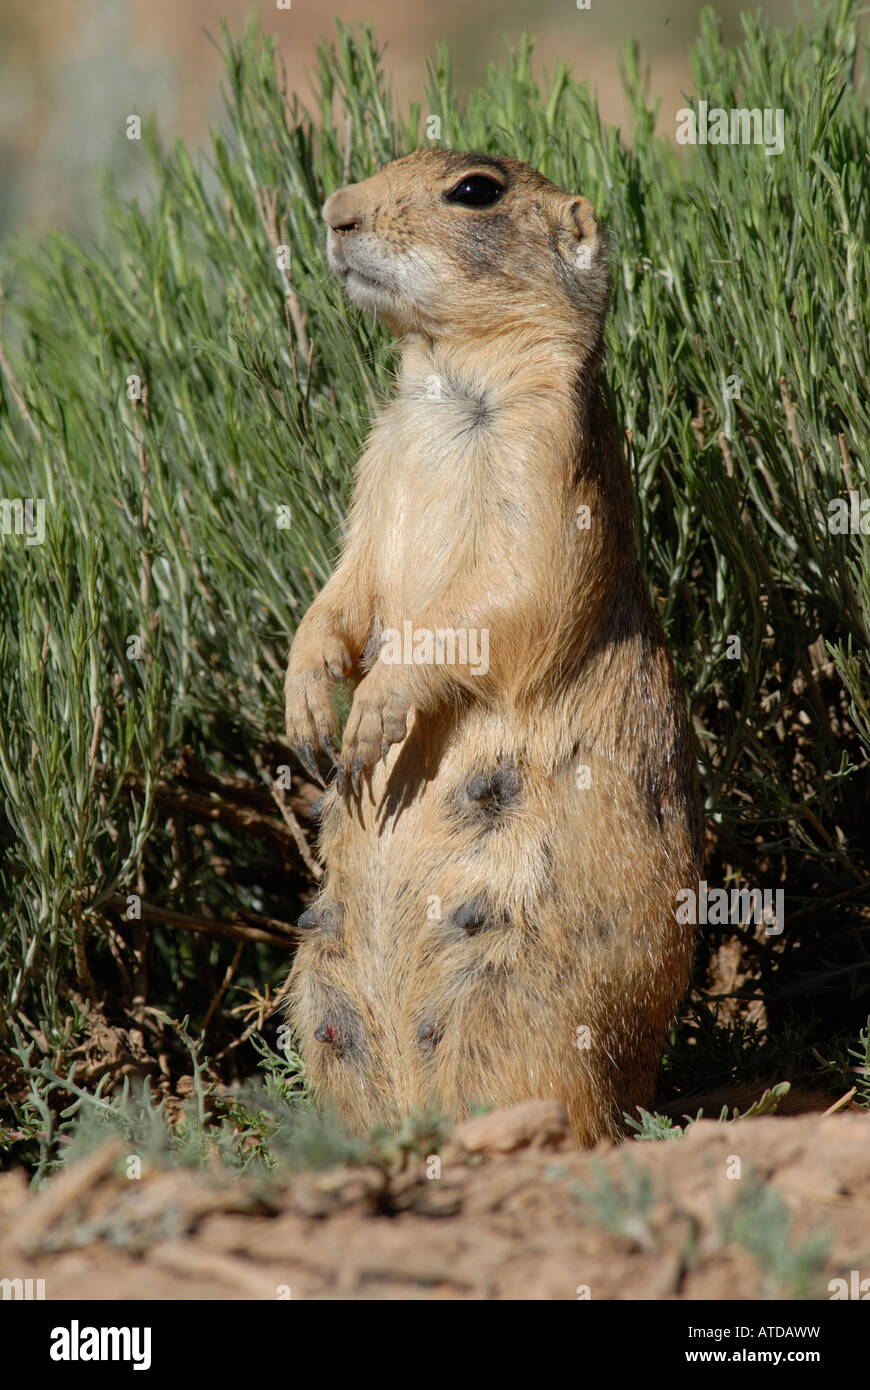 Stock photo of a female Utah prairie dog standing upright. Stock Photo